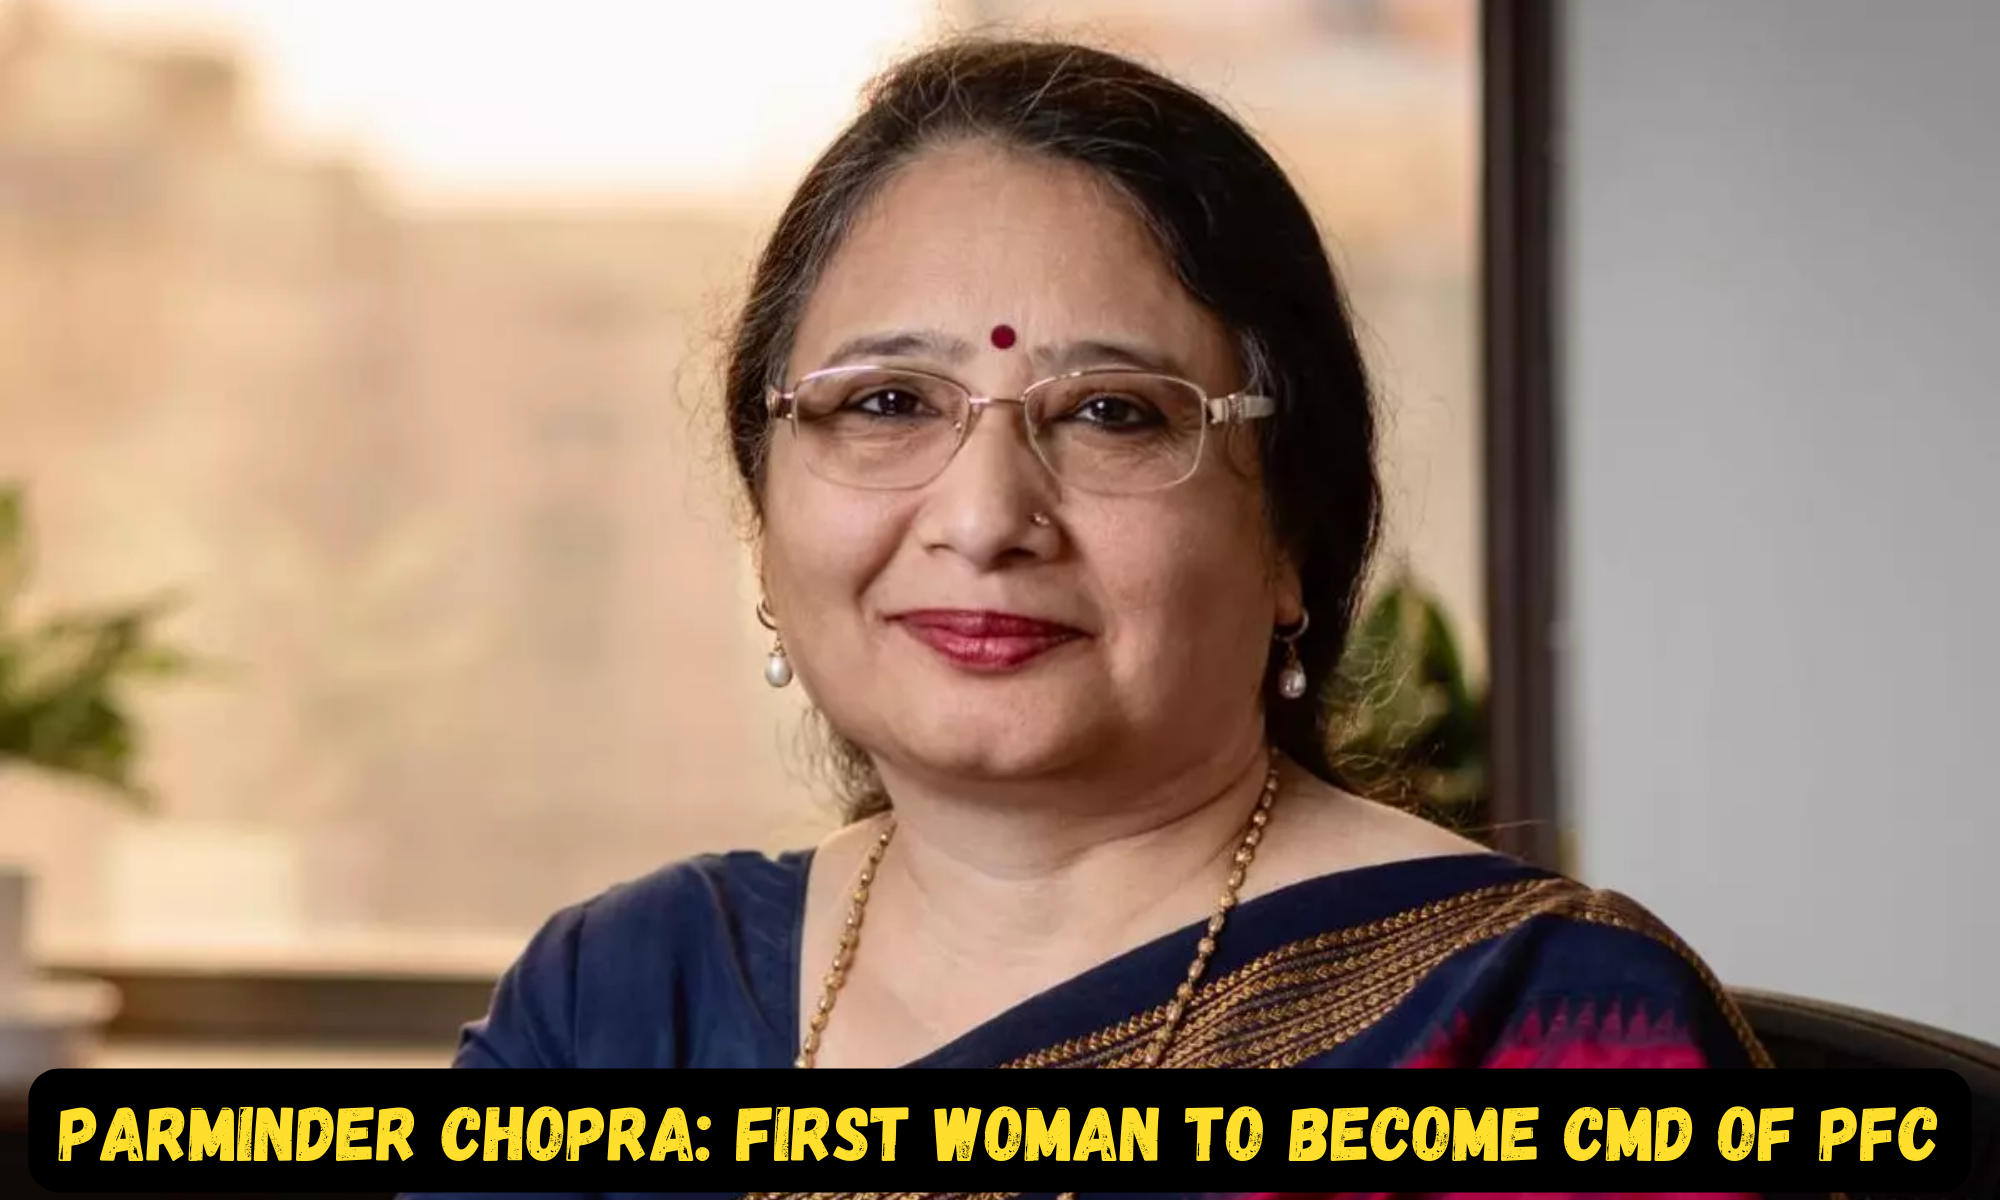 Parminder Chopra: First woman to become CMD of PFC